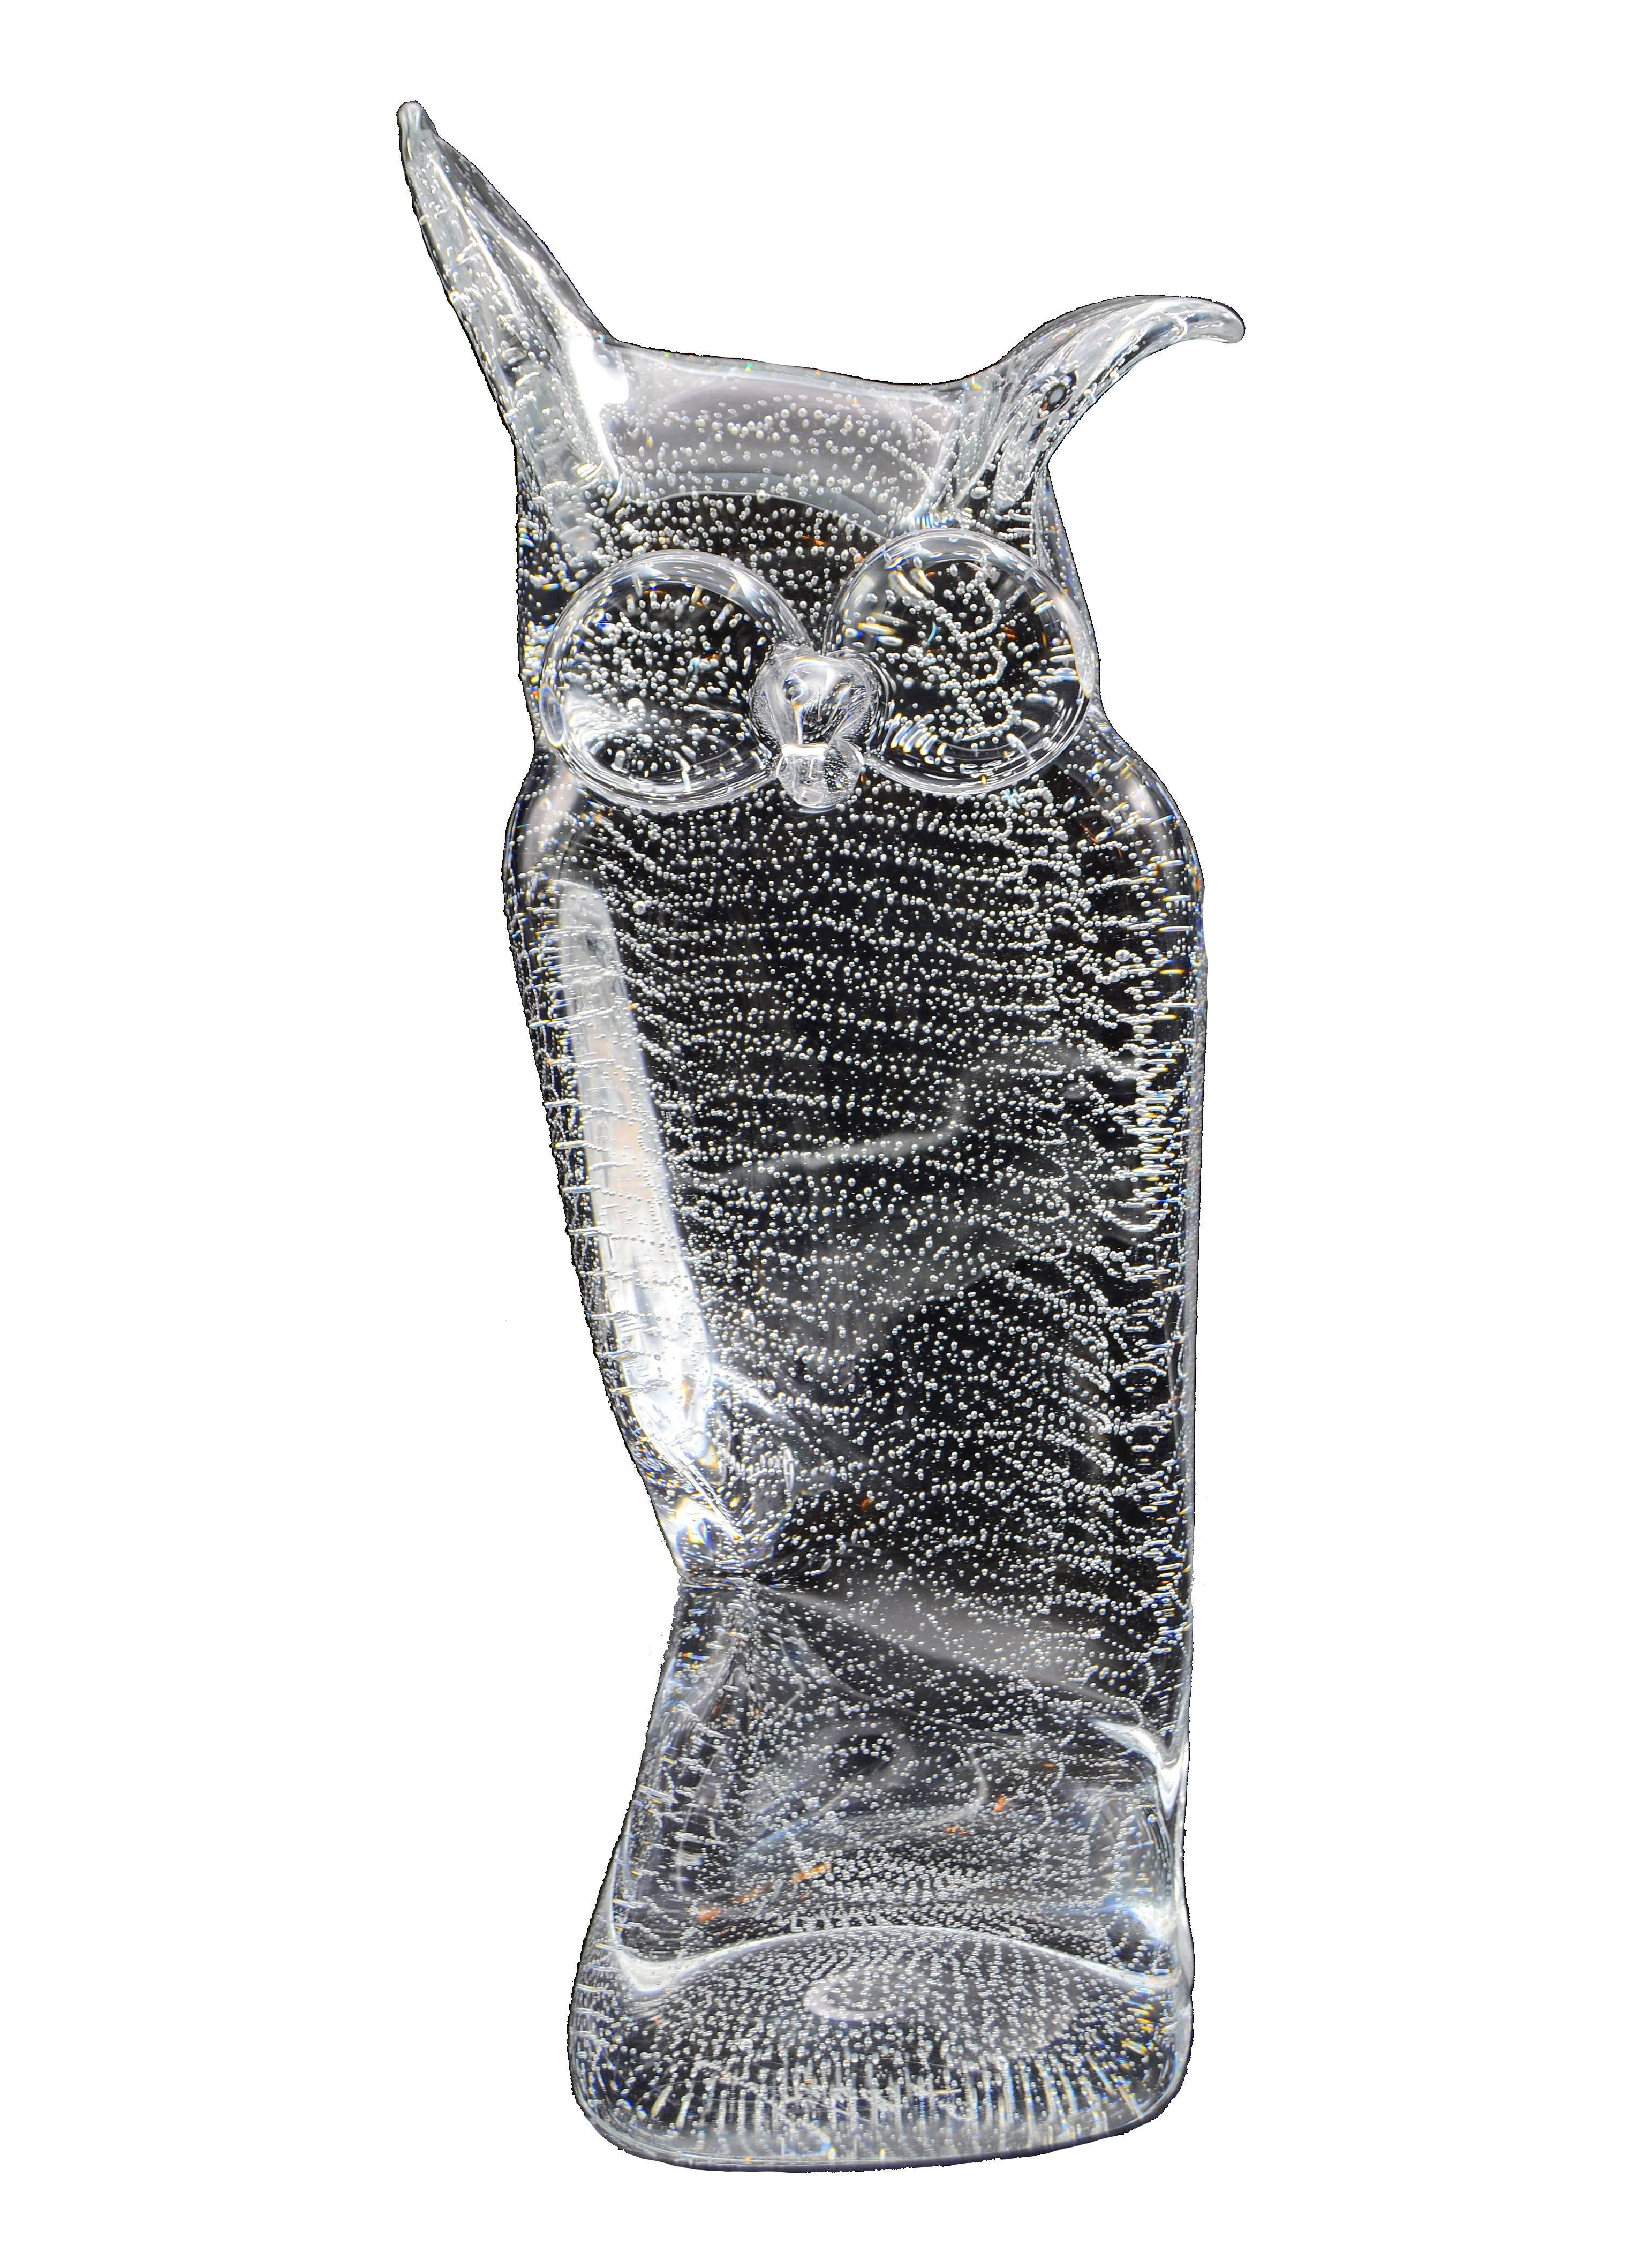 Licio Zanetti Murano Glass Owl Sculpture with Bubbles (Sculpture de hibou en verre de Murano avec bulles) 2